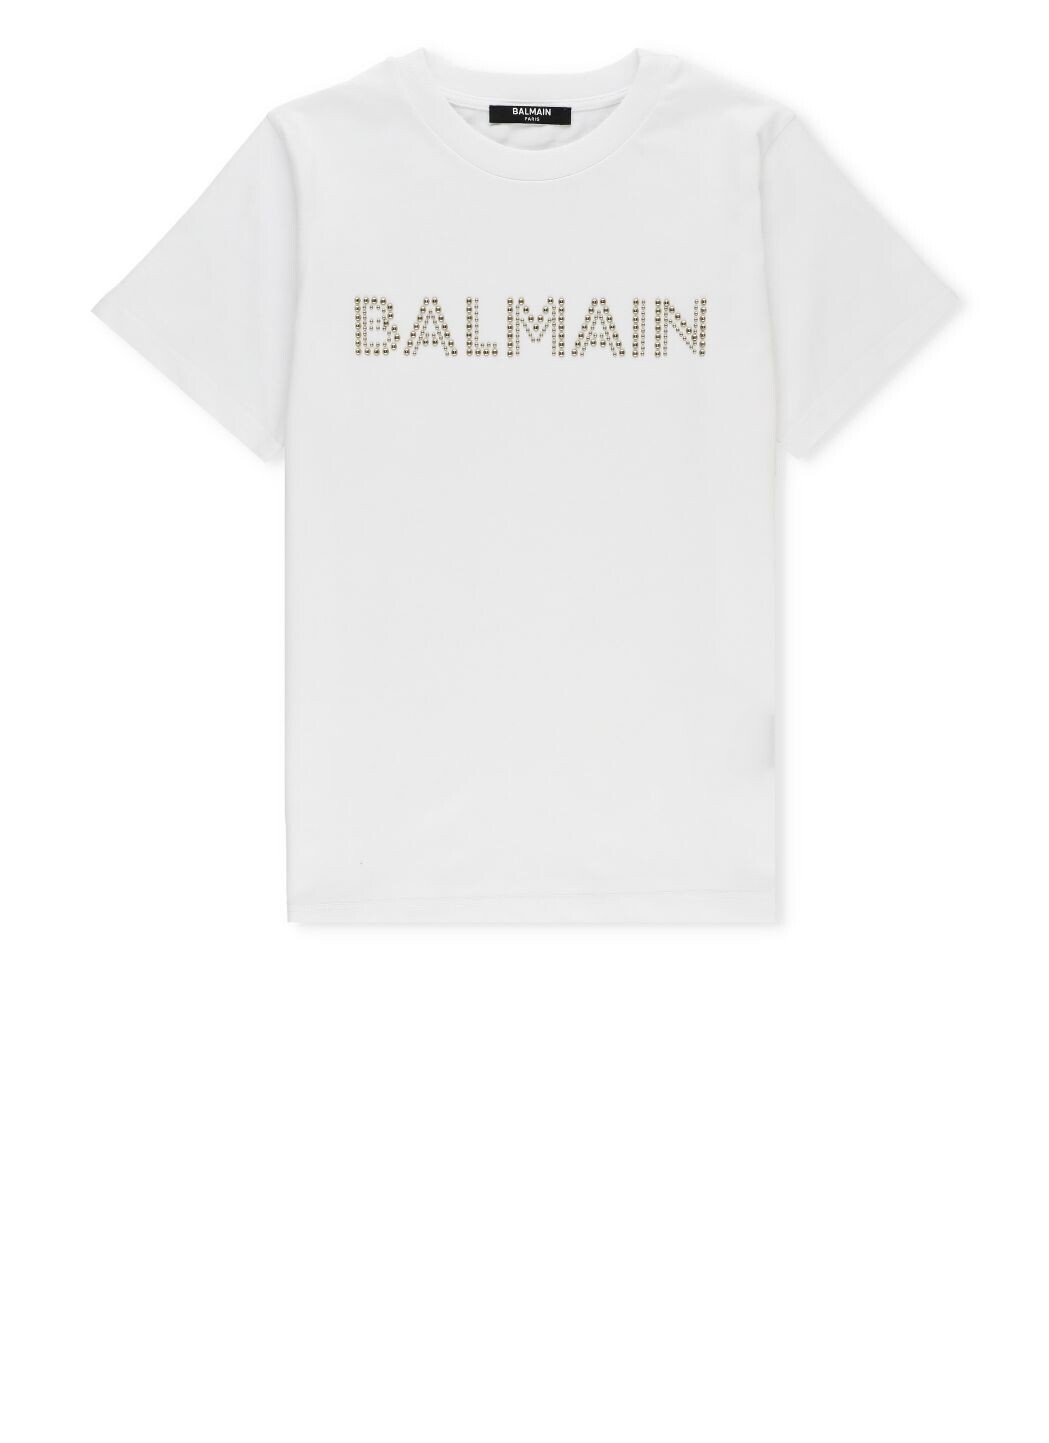 Balmain - T-shirt bianca borchie oro